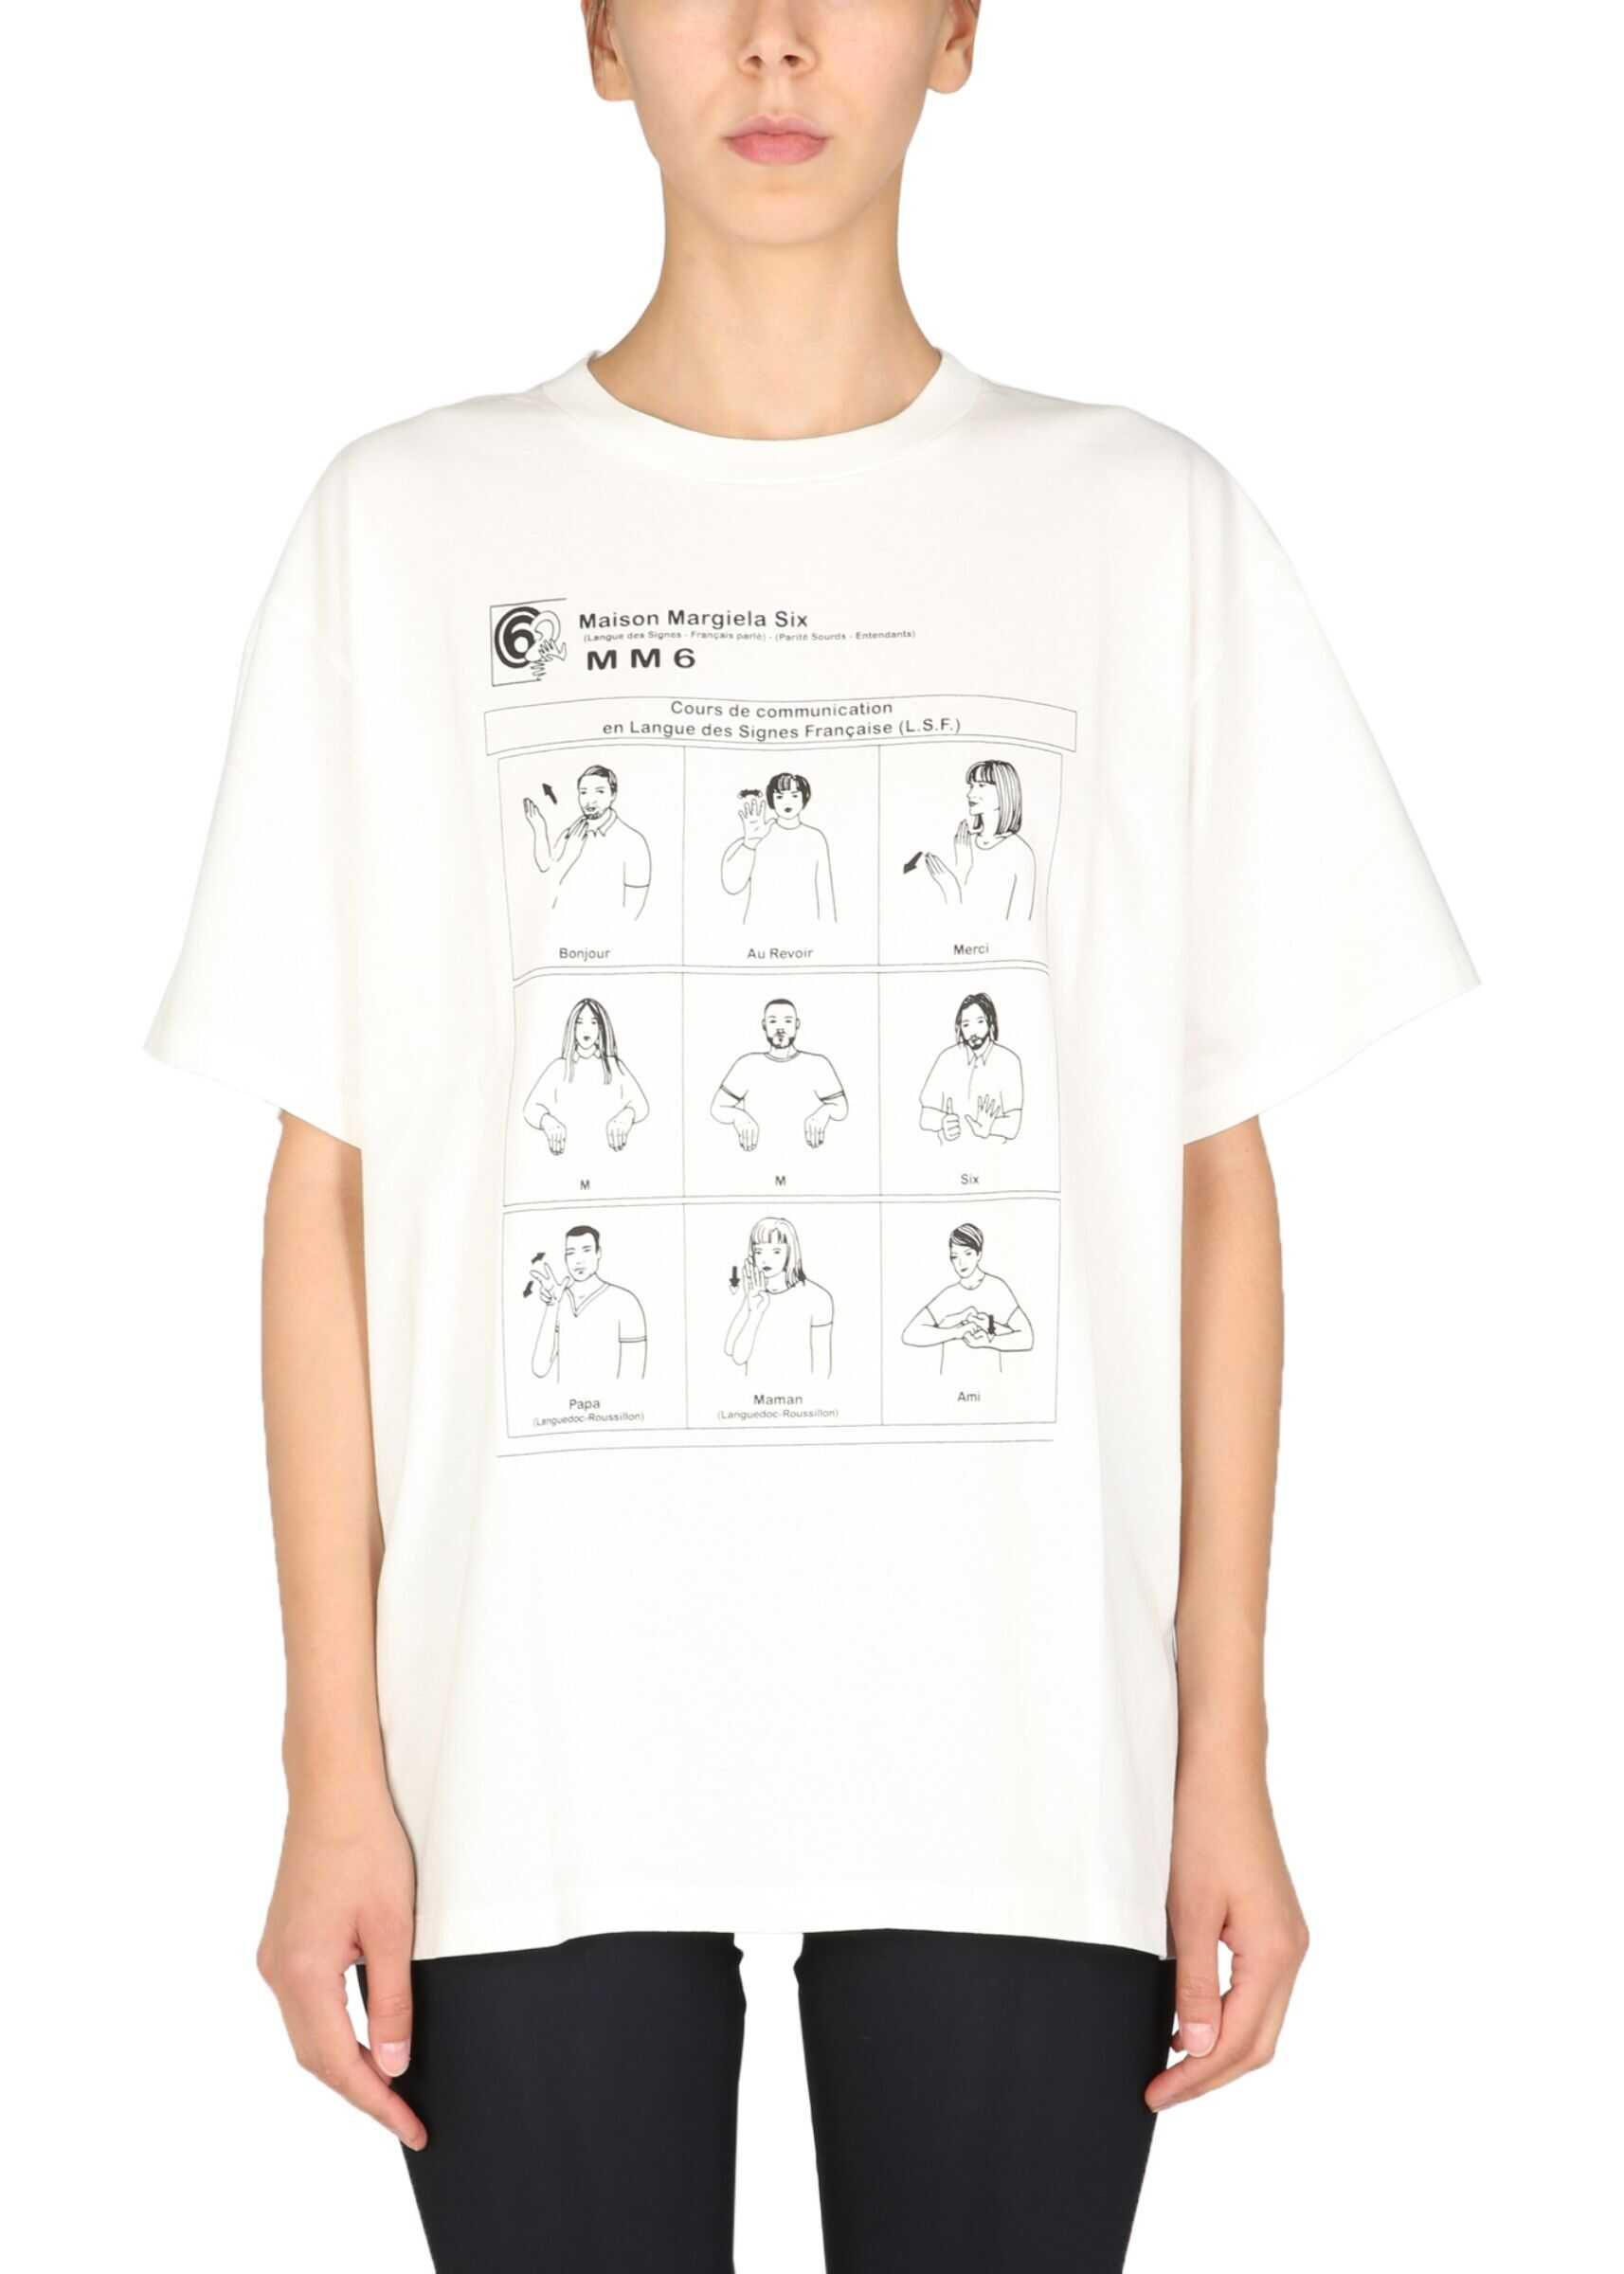 MM6 Maison Margiela Sign Language T-Shirt S52GC0213_S23962101 WHITE